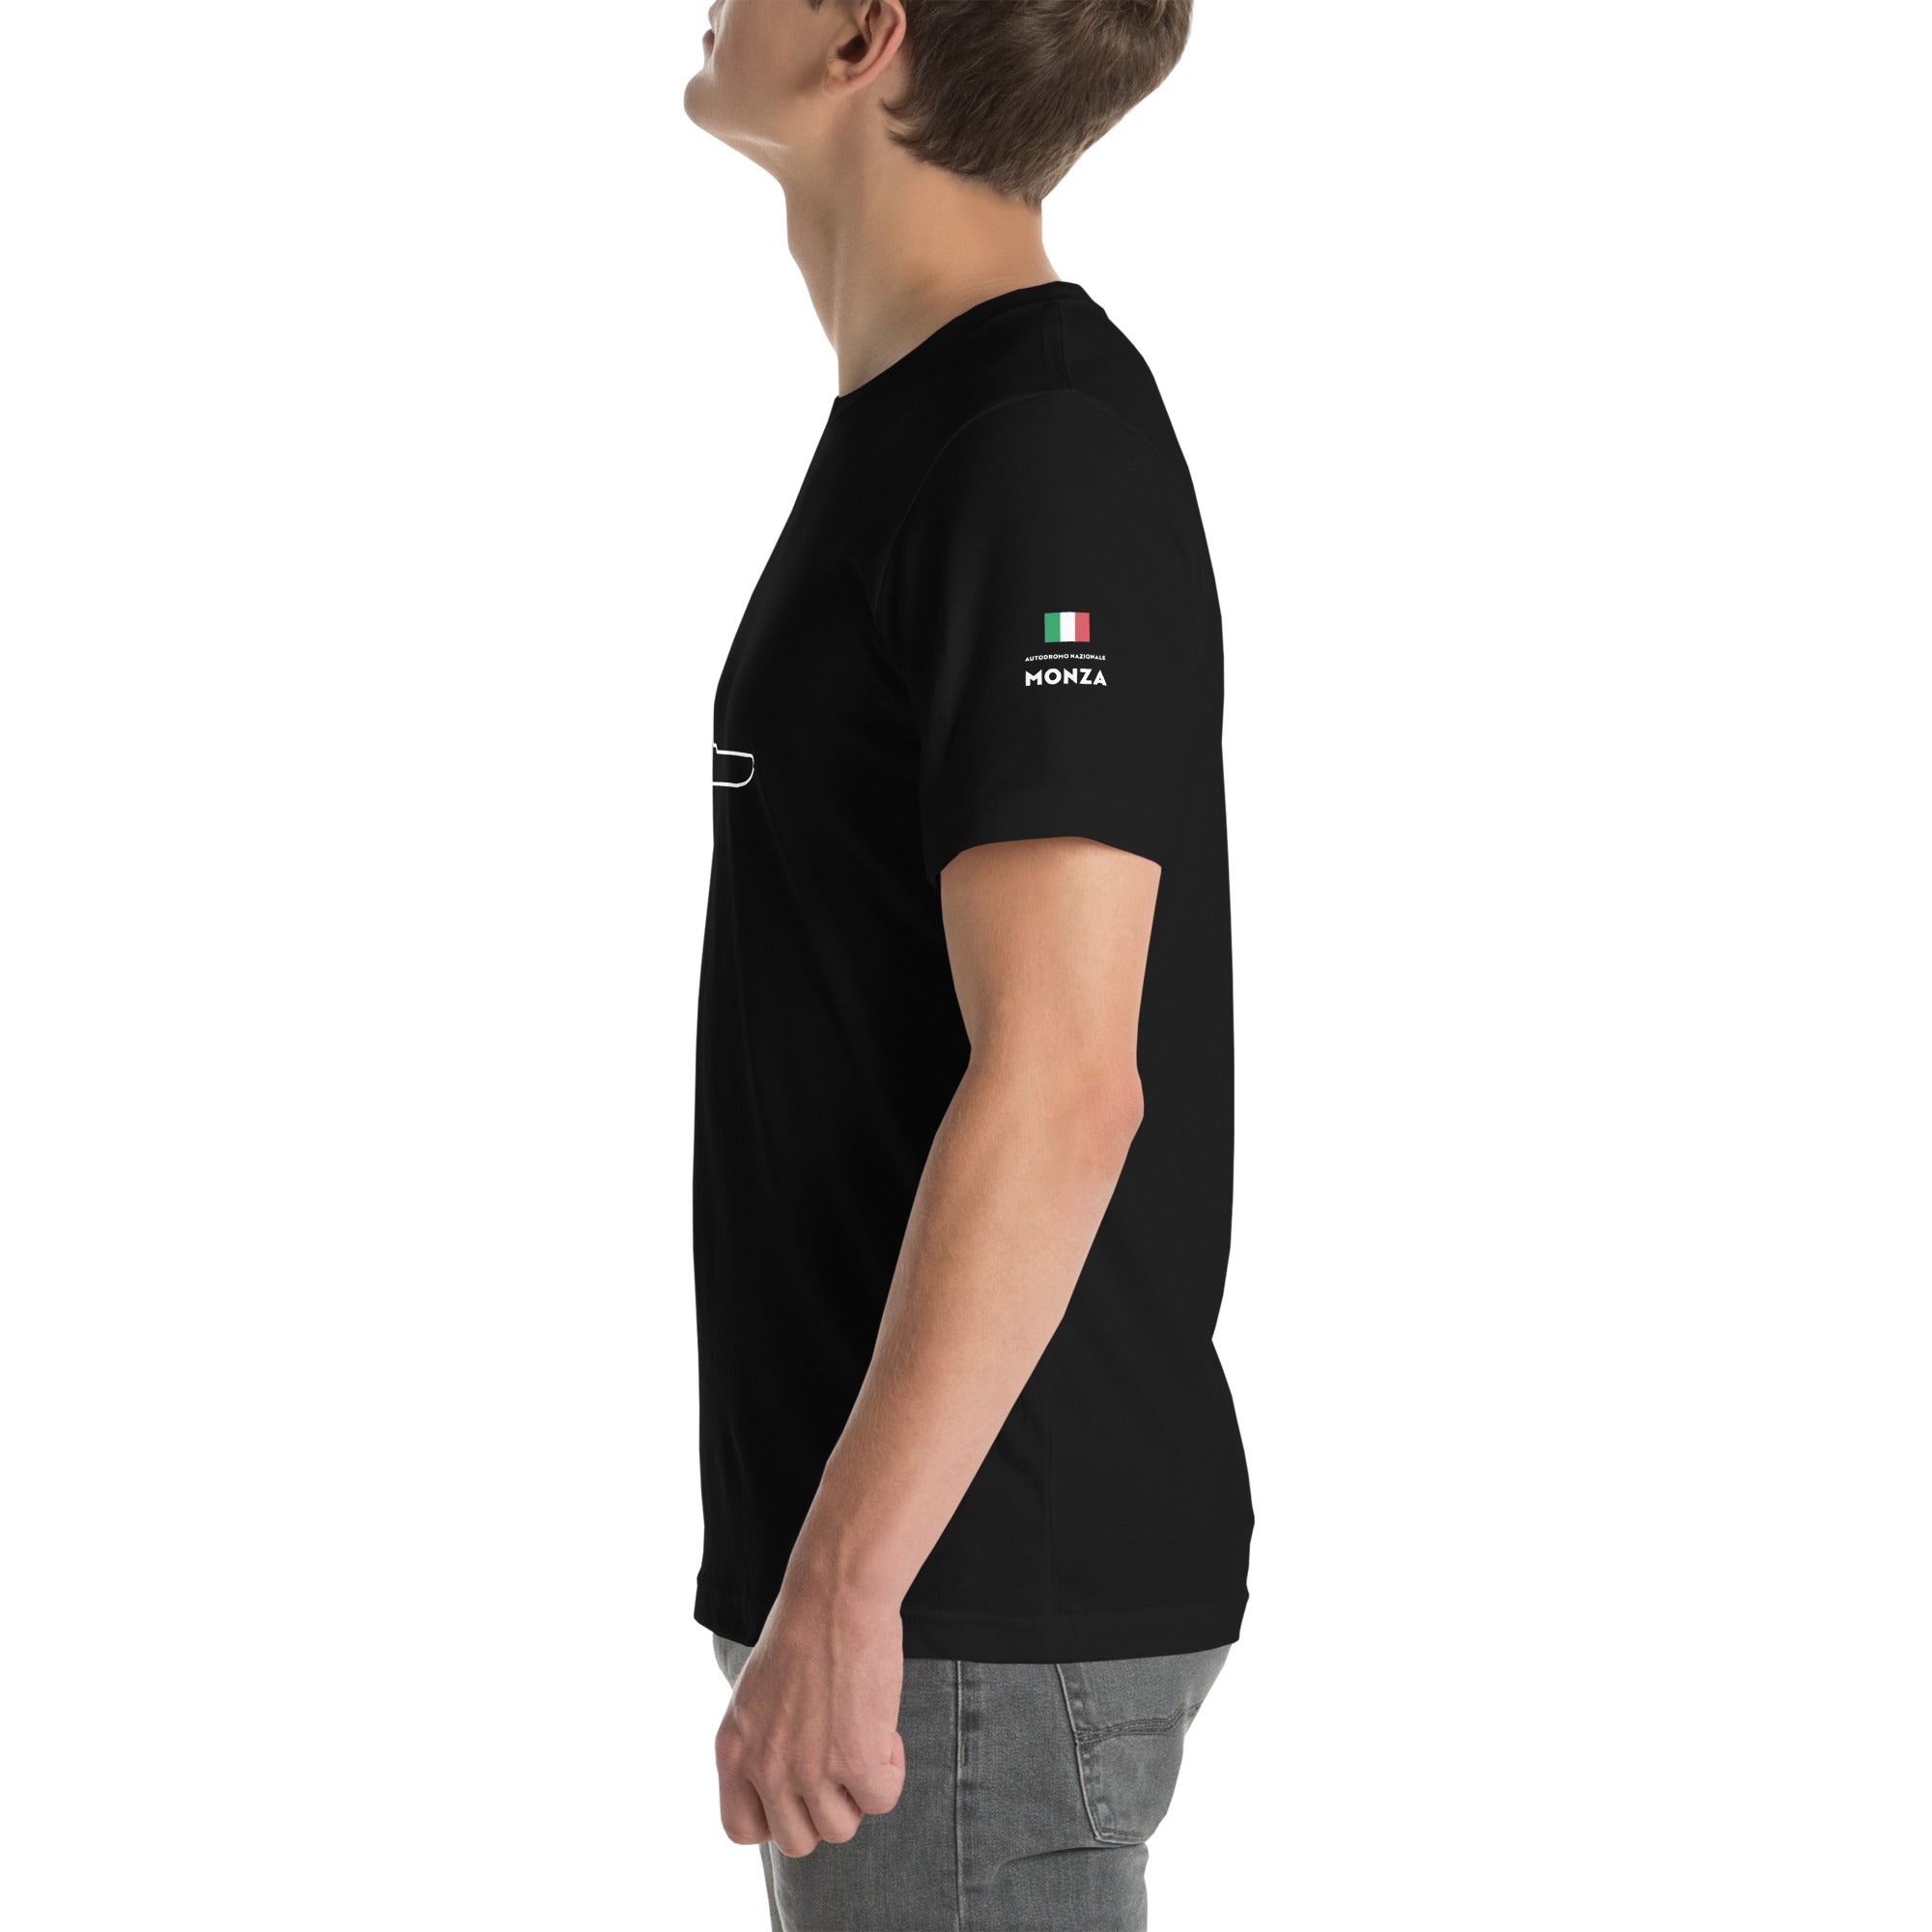 Monza: F1 Historic Circuit - Unisex T-Shirt Black side